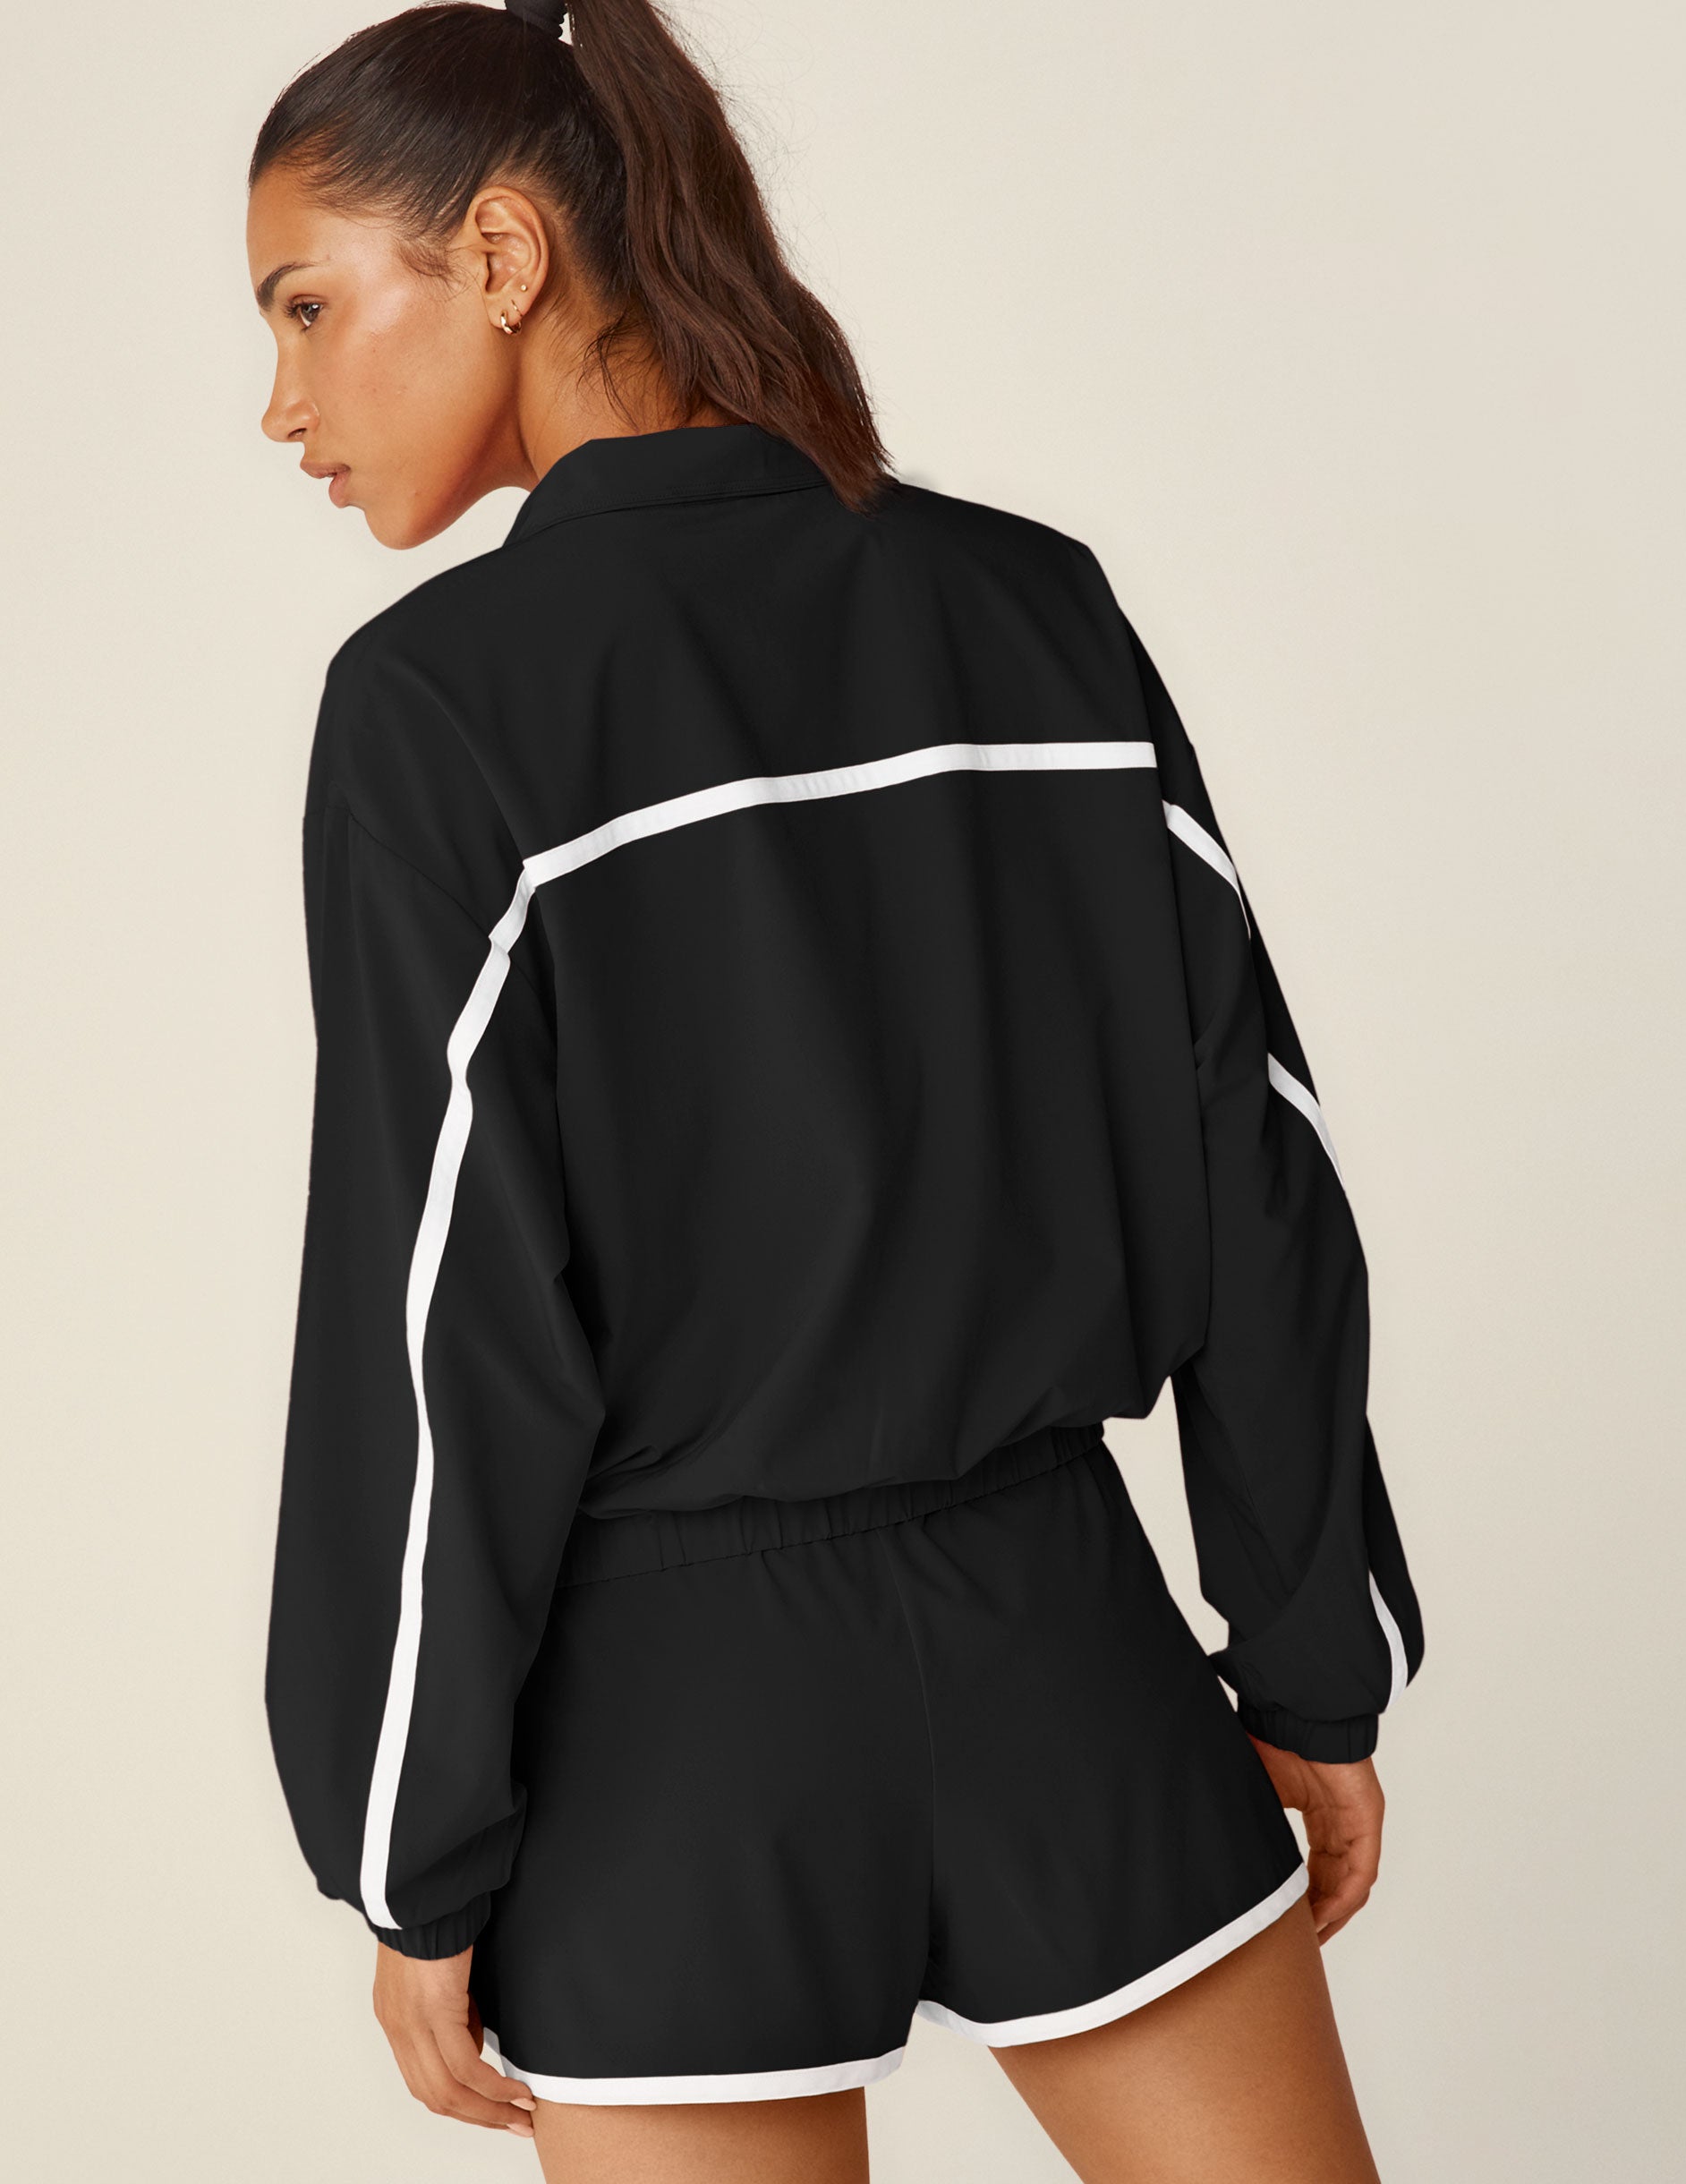 black zip-up jacket with white lining.